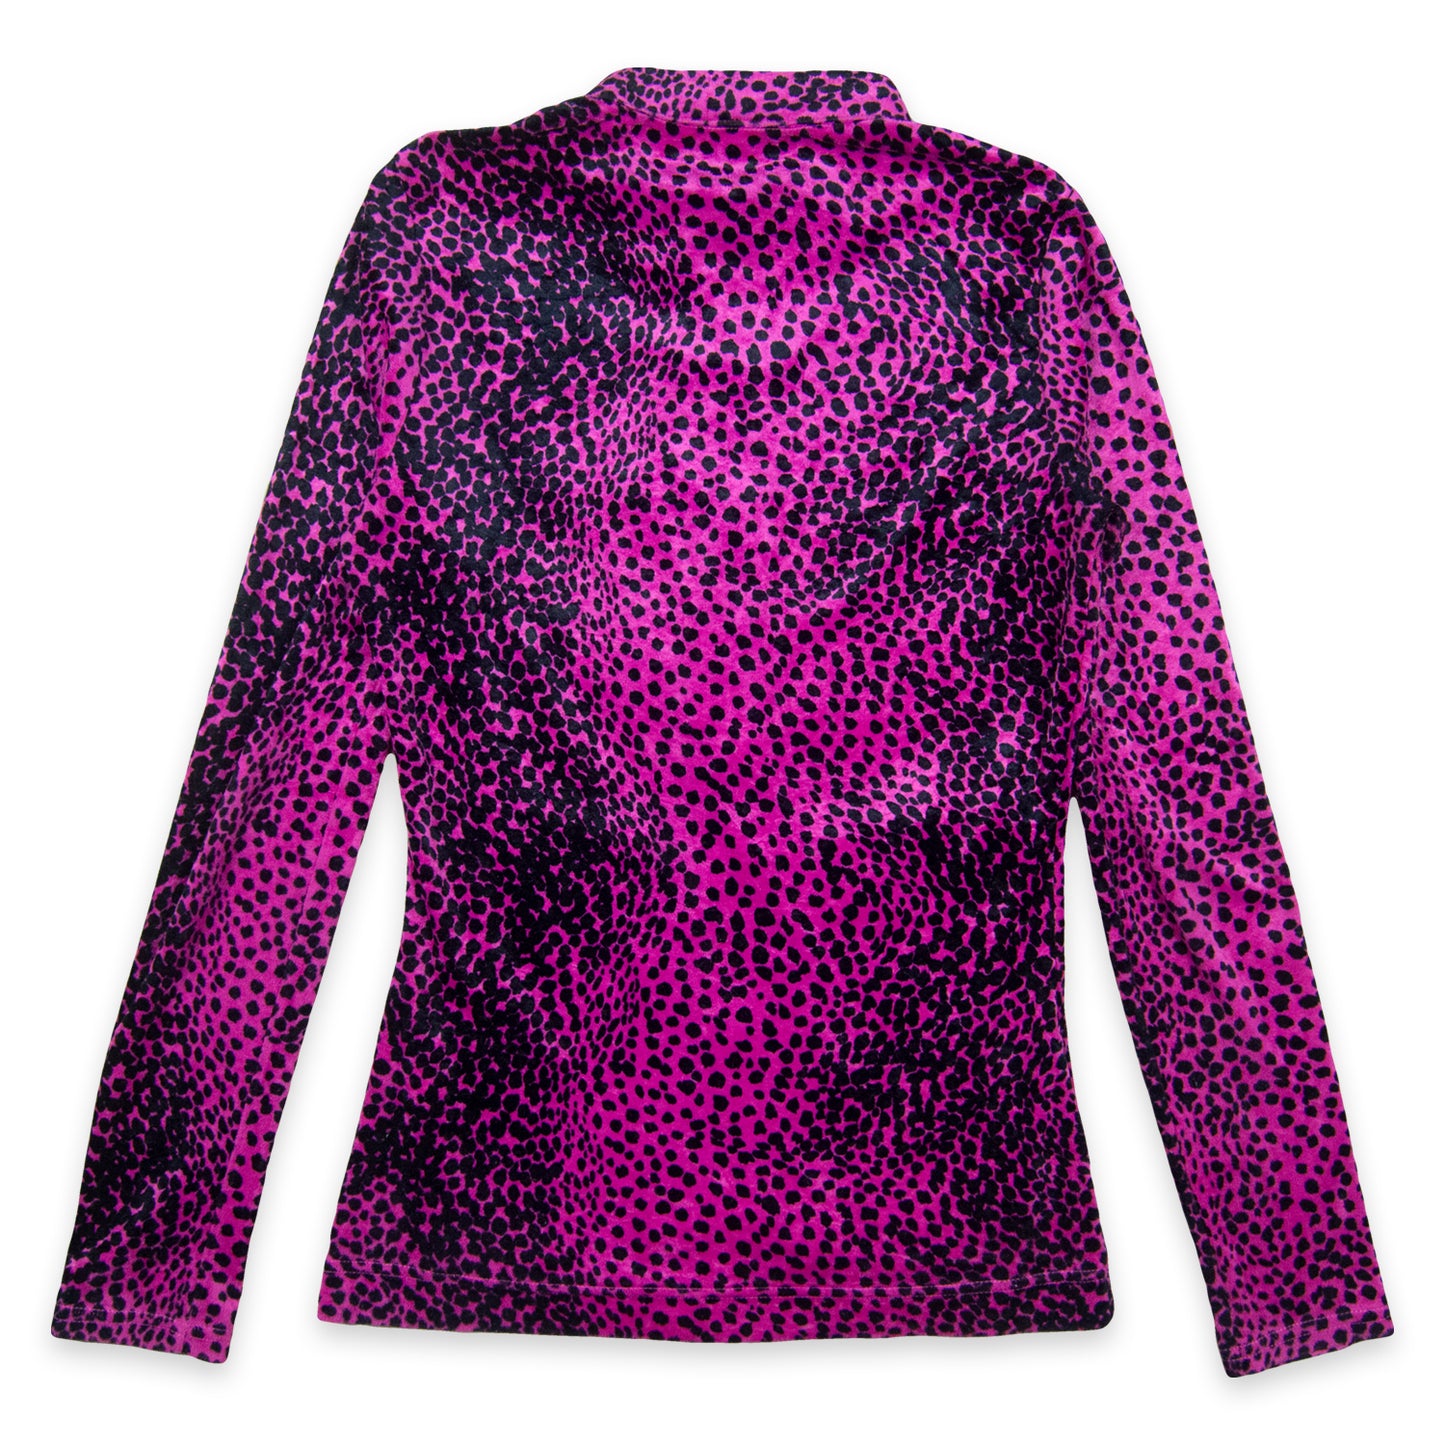 Hysteric Glamour Cheetah Print Thin Velour Zip Up Jacket